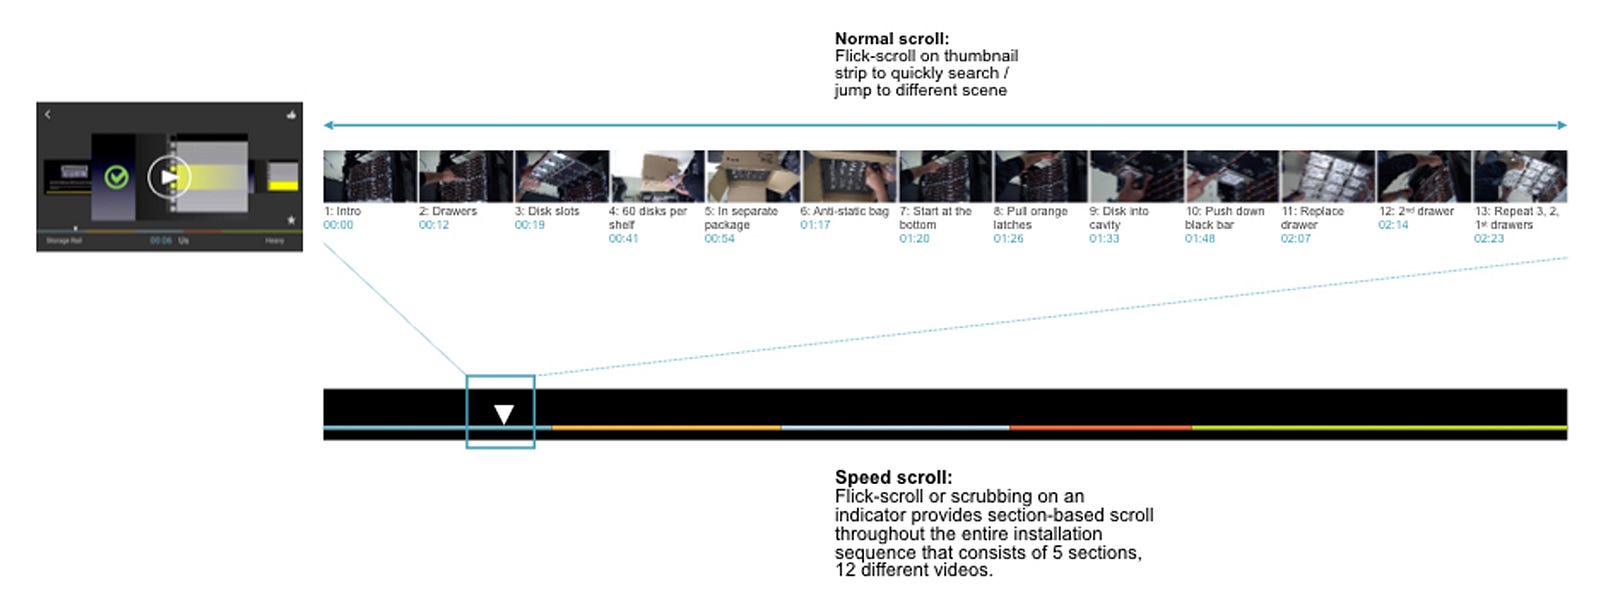 A diagram explaining landscape normal scroll and speed scroll via progress bar.